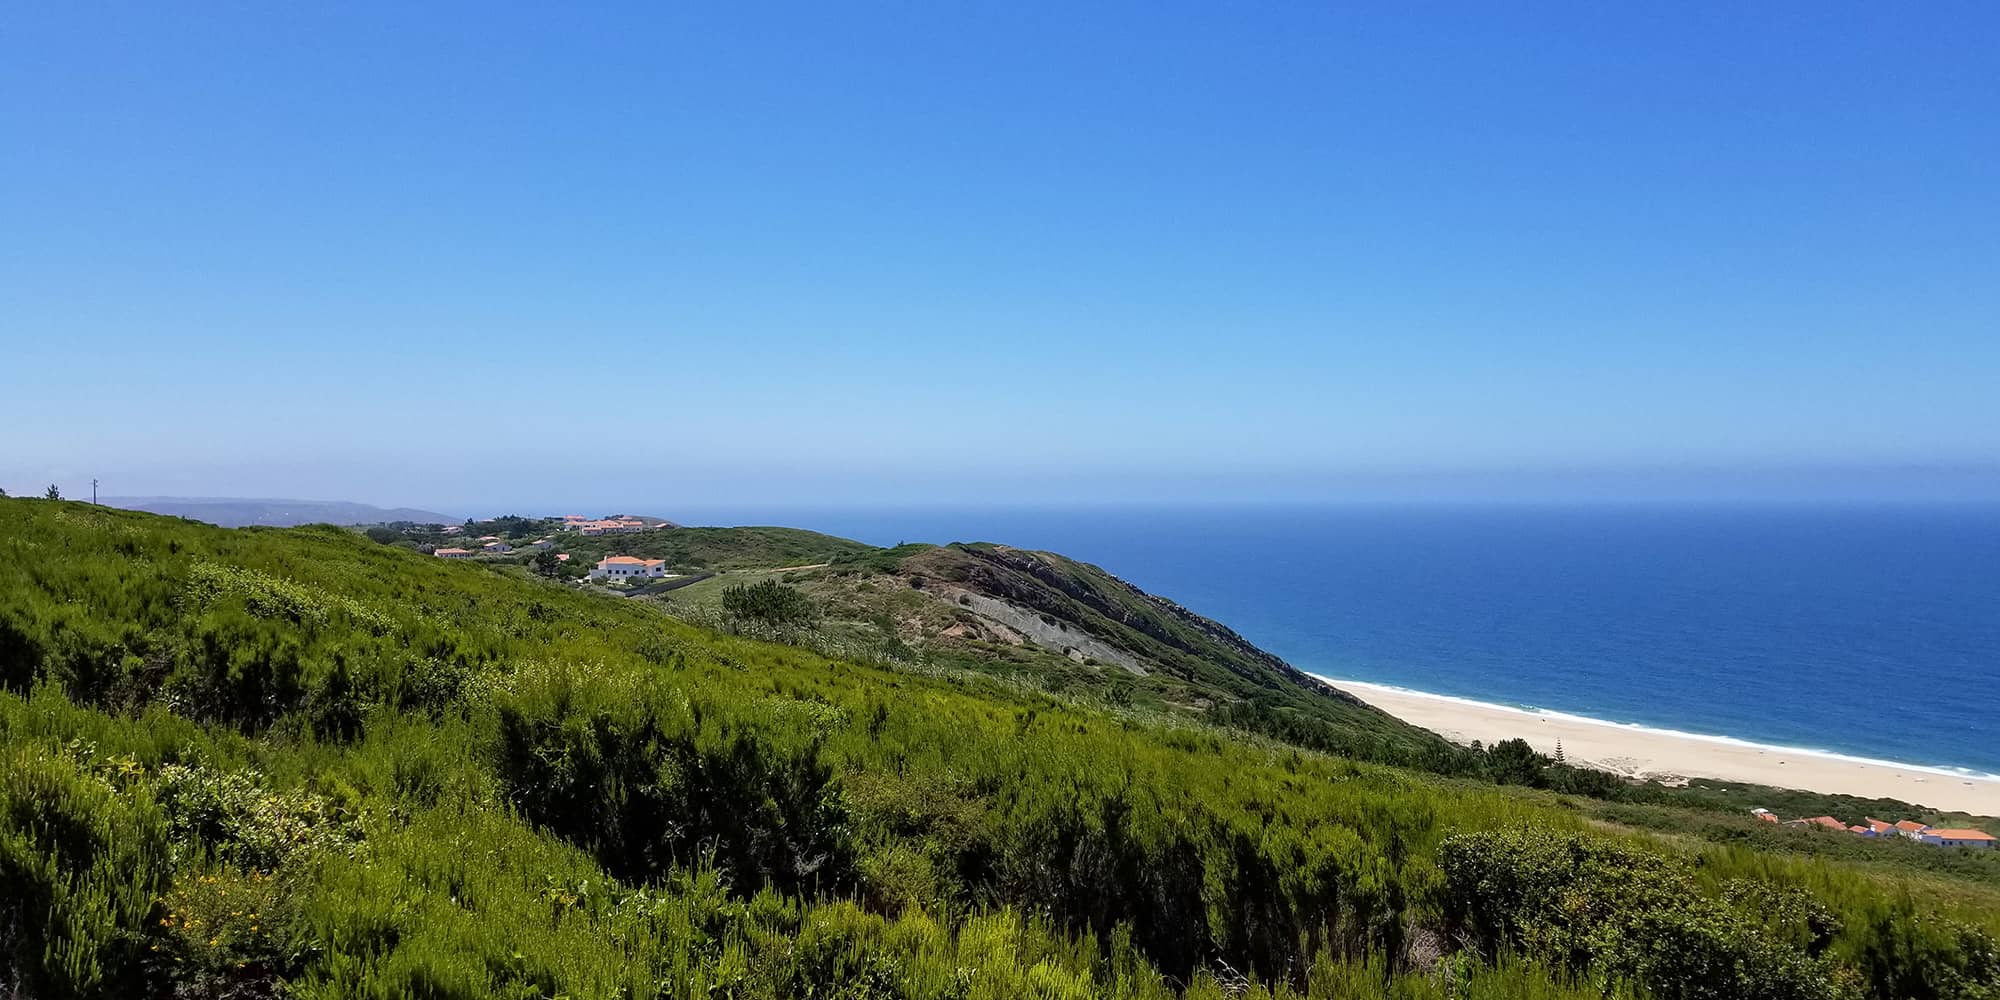 silver coast portugal near nazare over looking the Atlantic Ocean